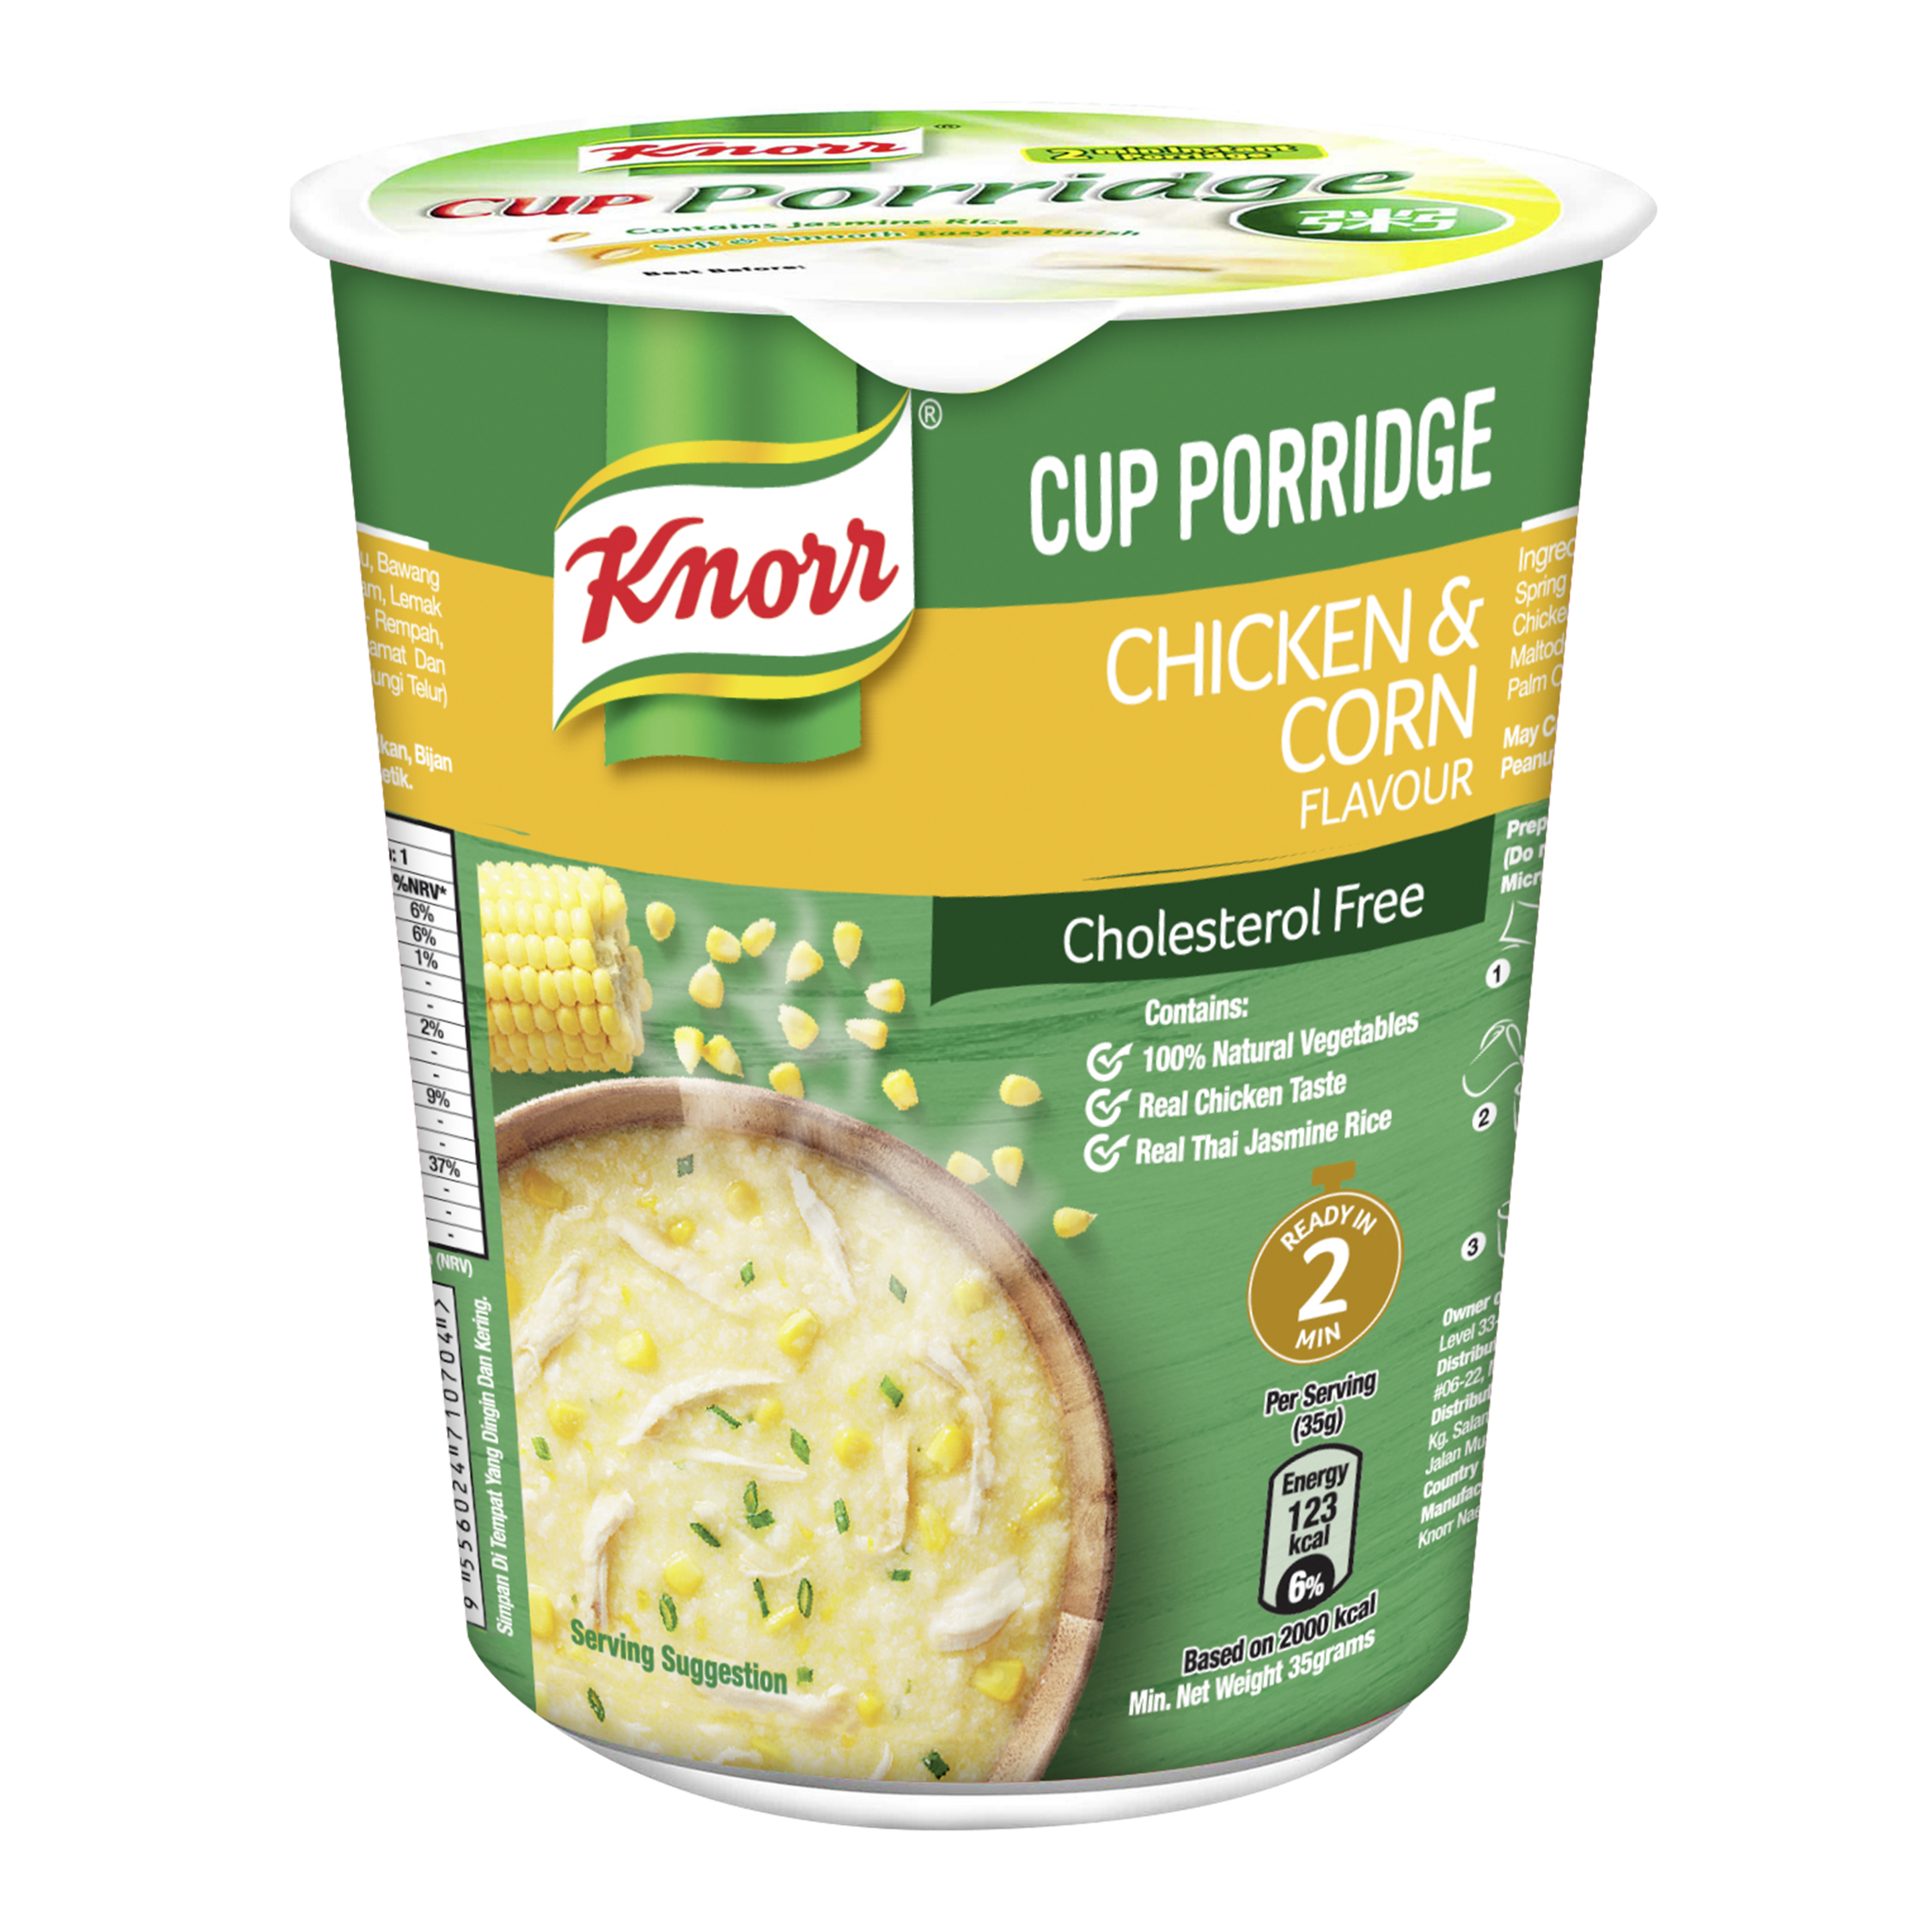 Chicken & Corn Porridge